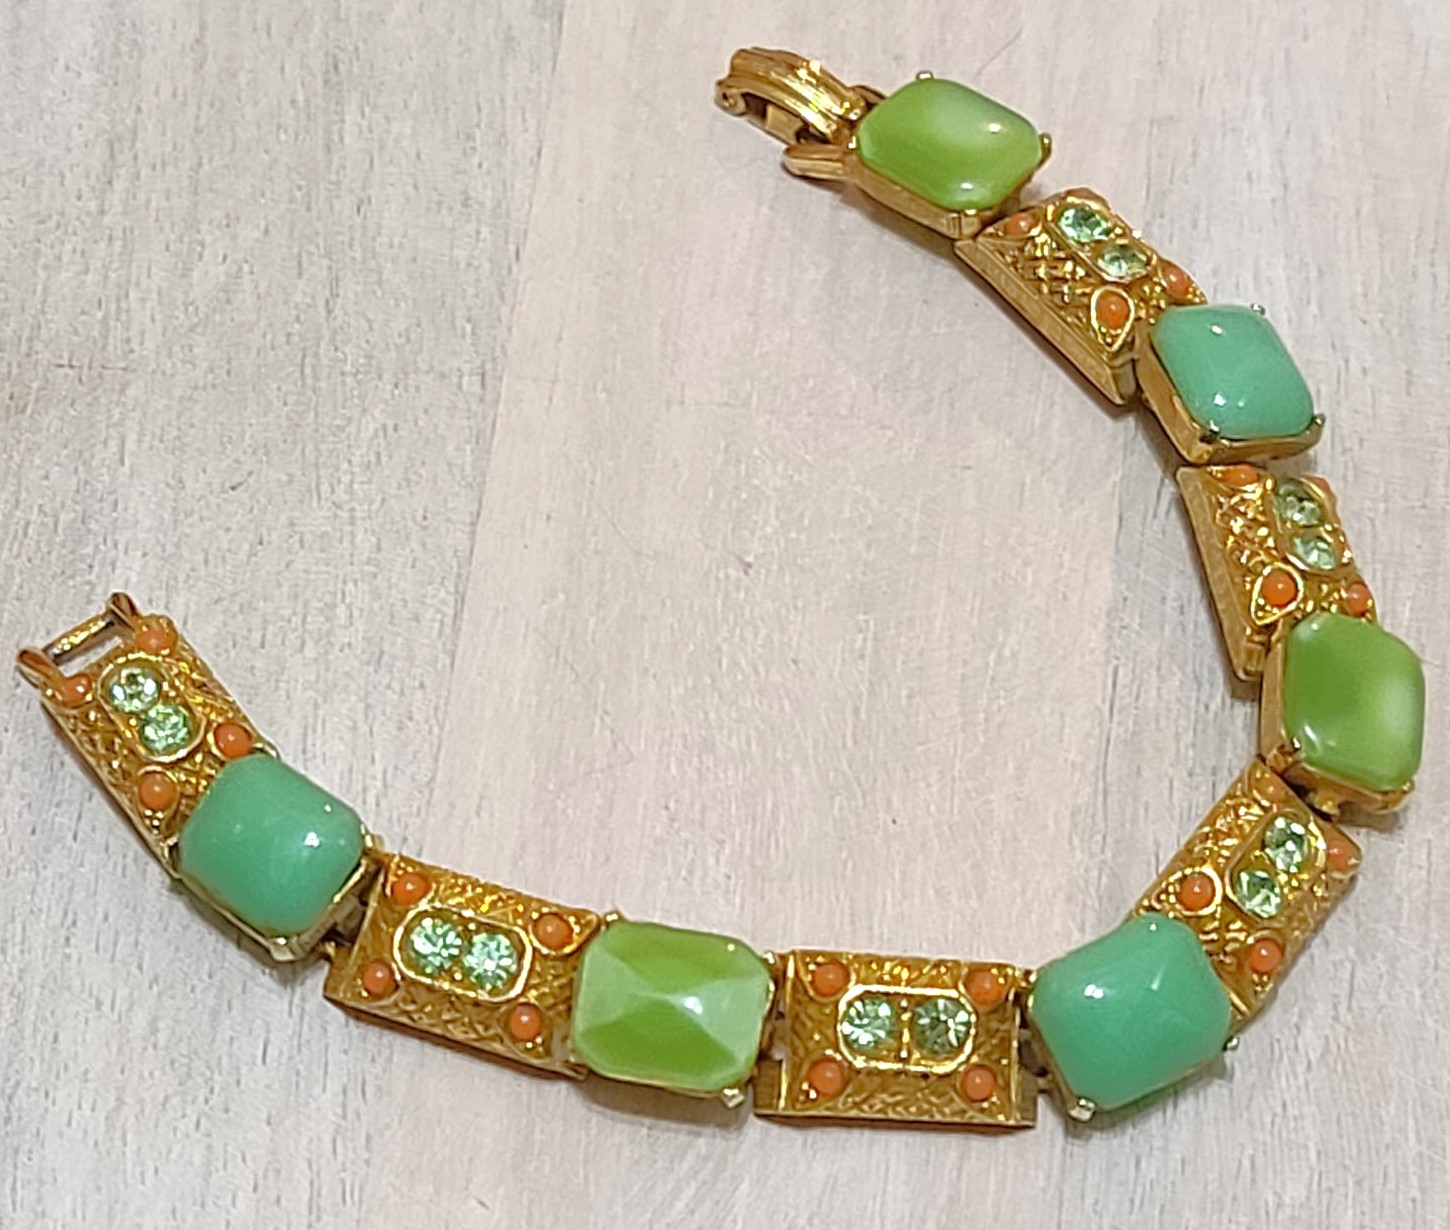 Green cabachon bracelet, vintage with orange cabachons, rhinestones, signed designerr ART